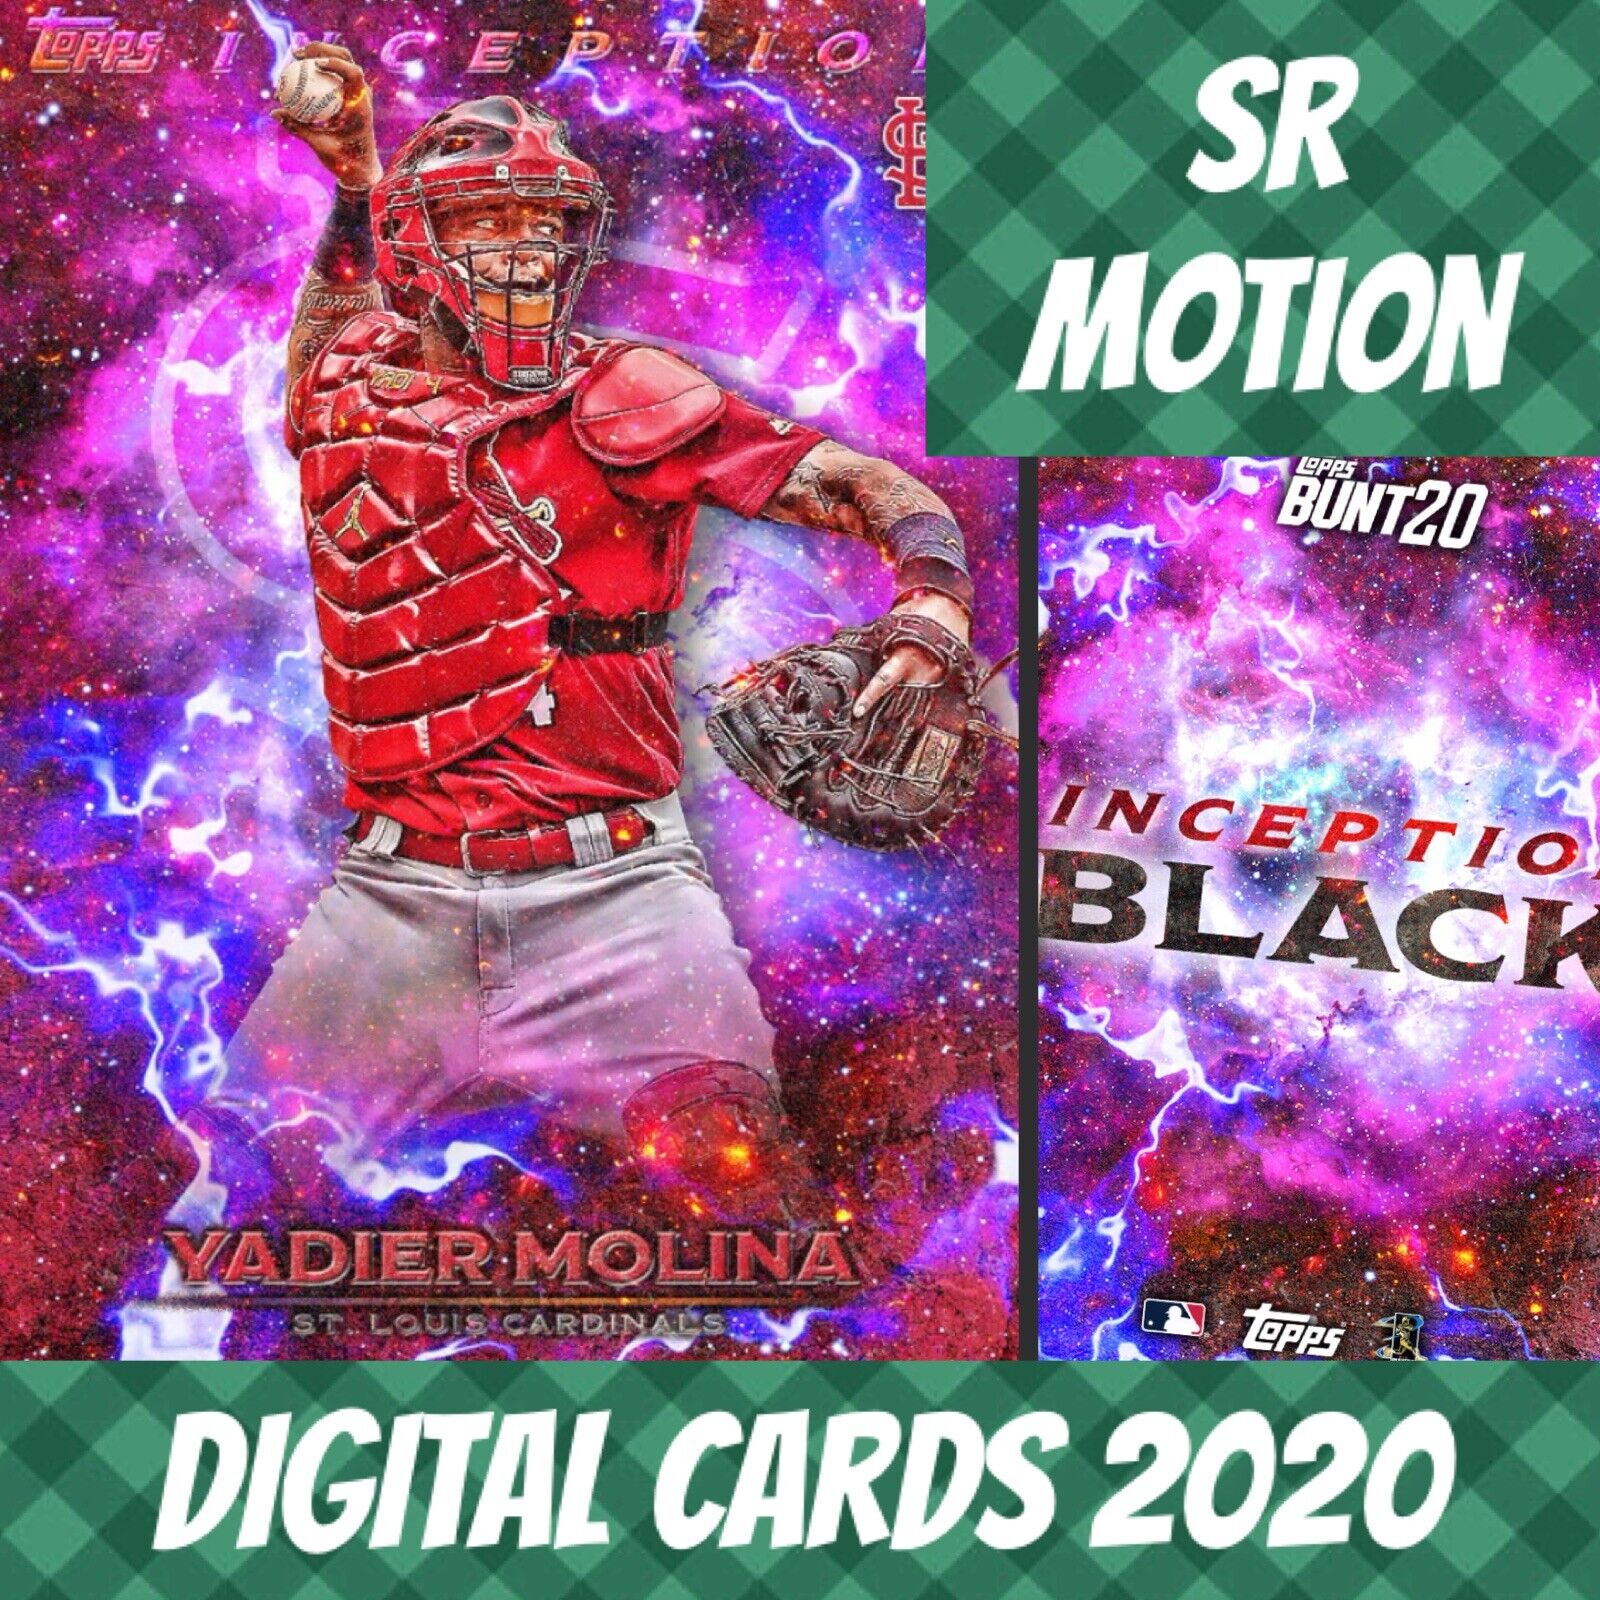 2020 Topps Colorful 20 Yadier Molina Inception Black Galaxy Base S/1 Digital Card